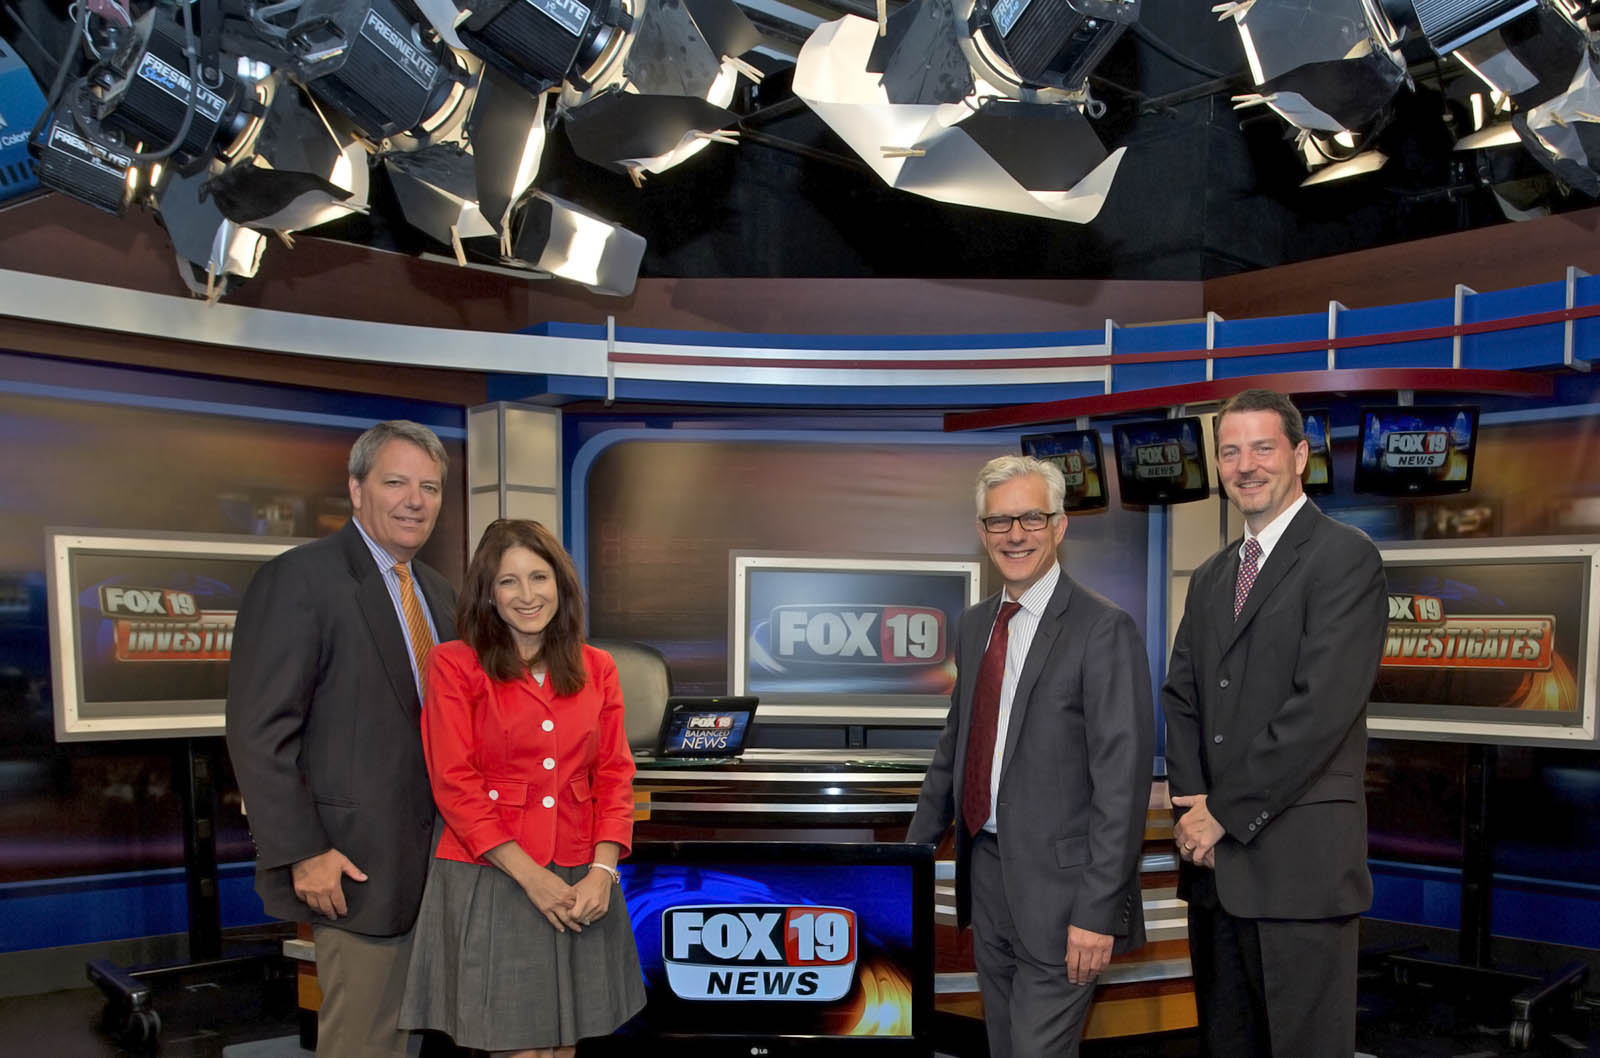 WXIX News Cincinnati news team